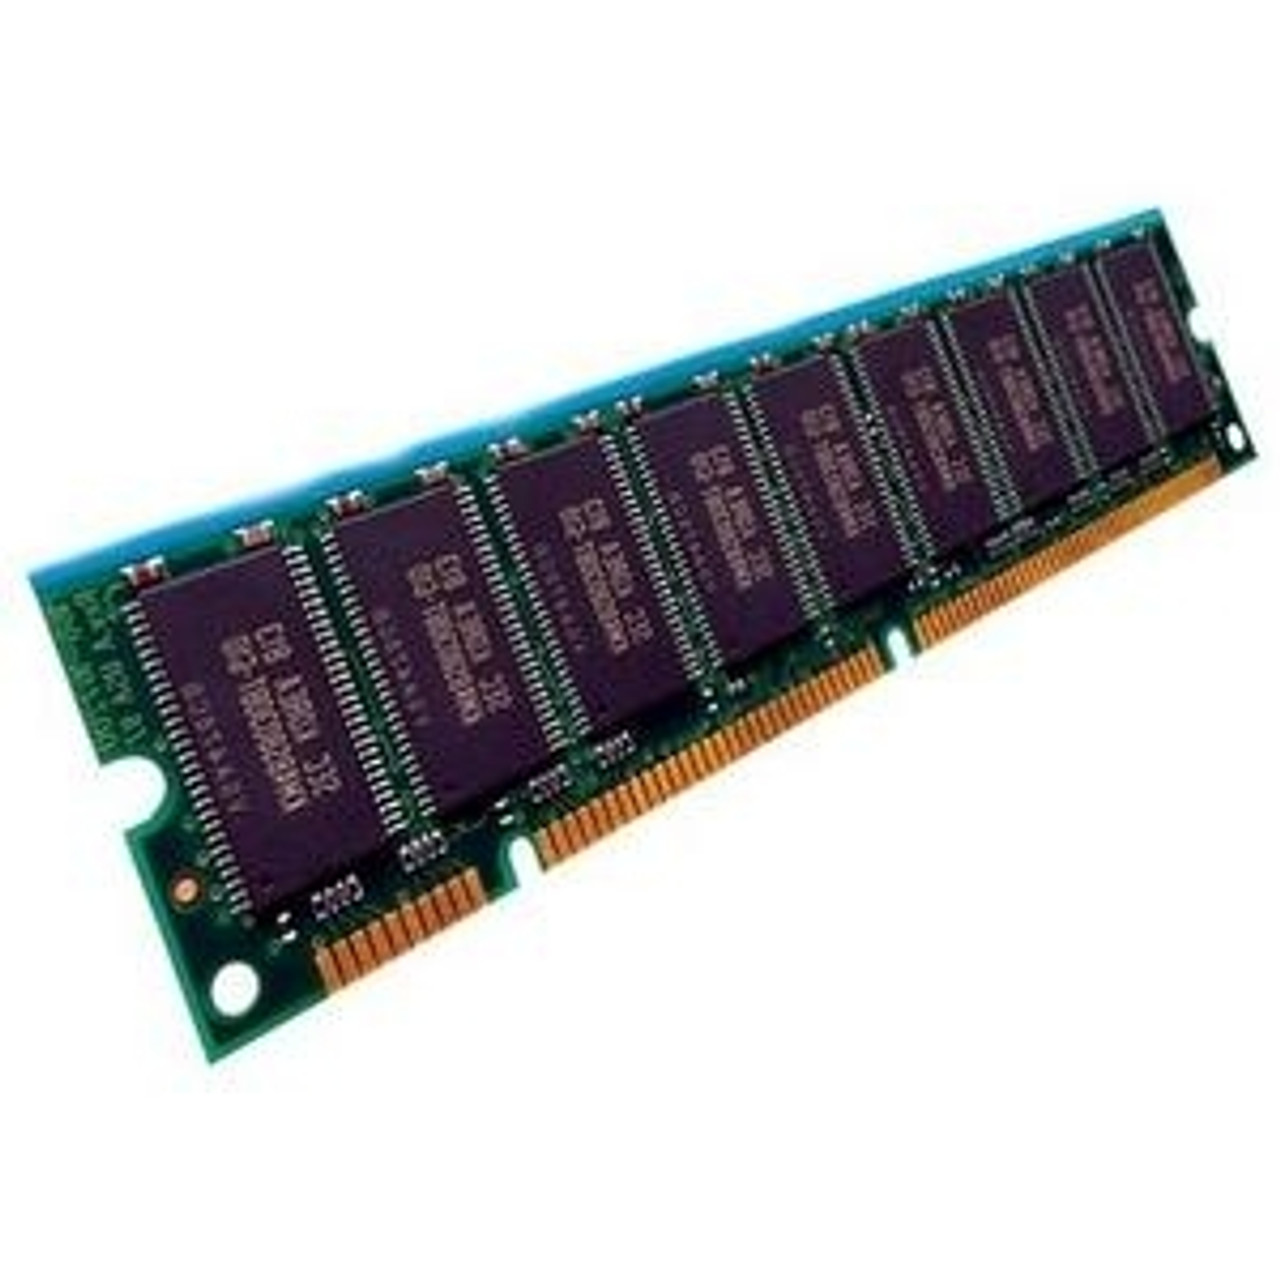 MG3/128 Viking 128MB SDRAM Memory Module